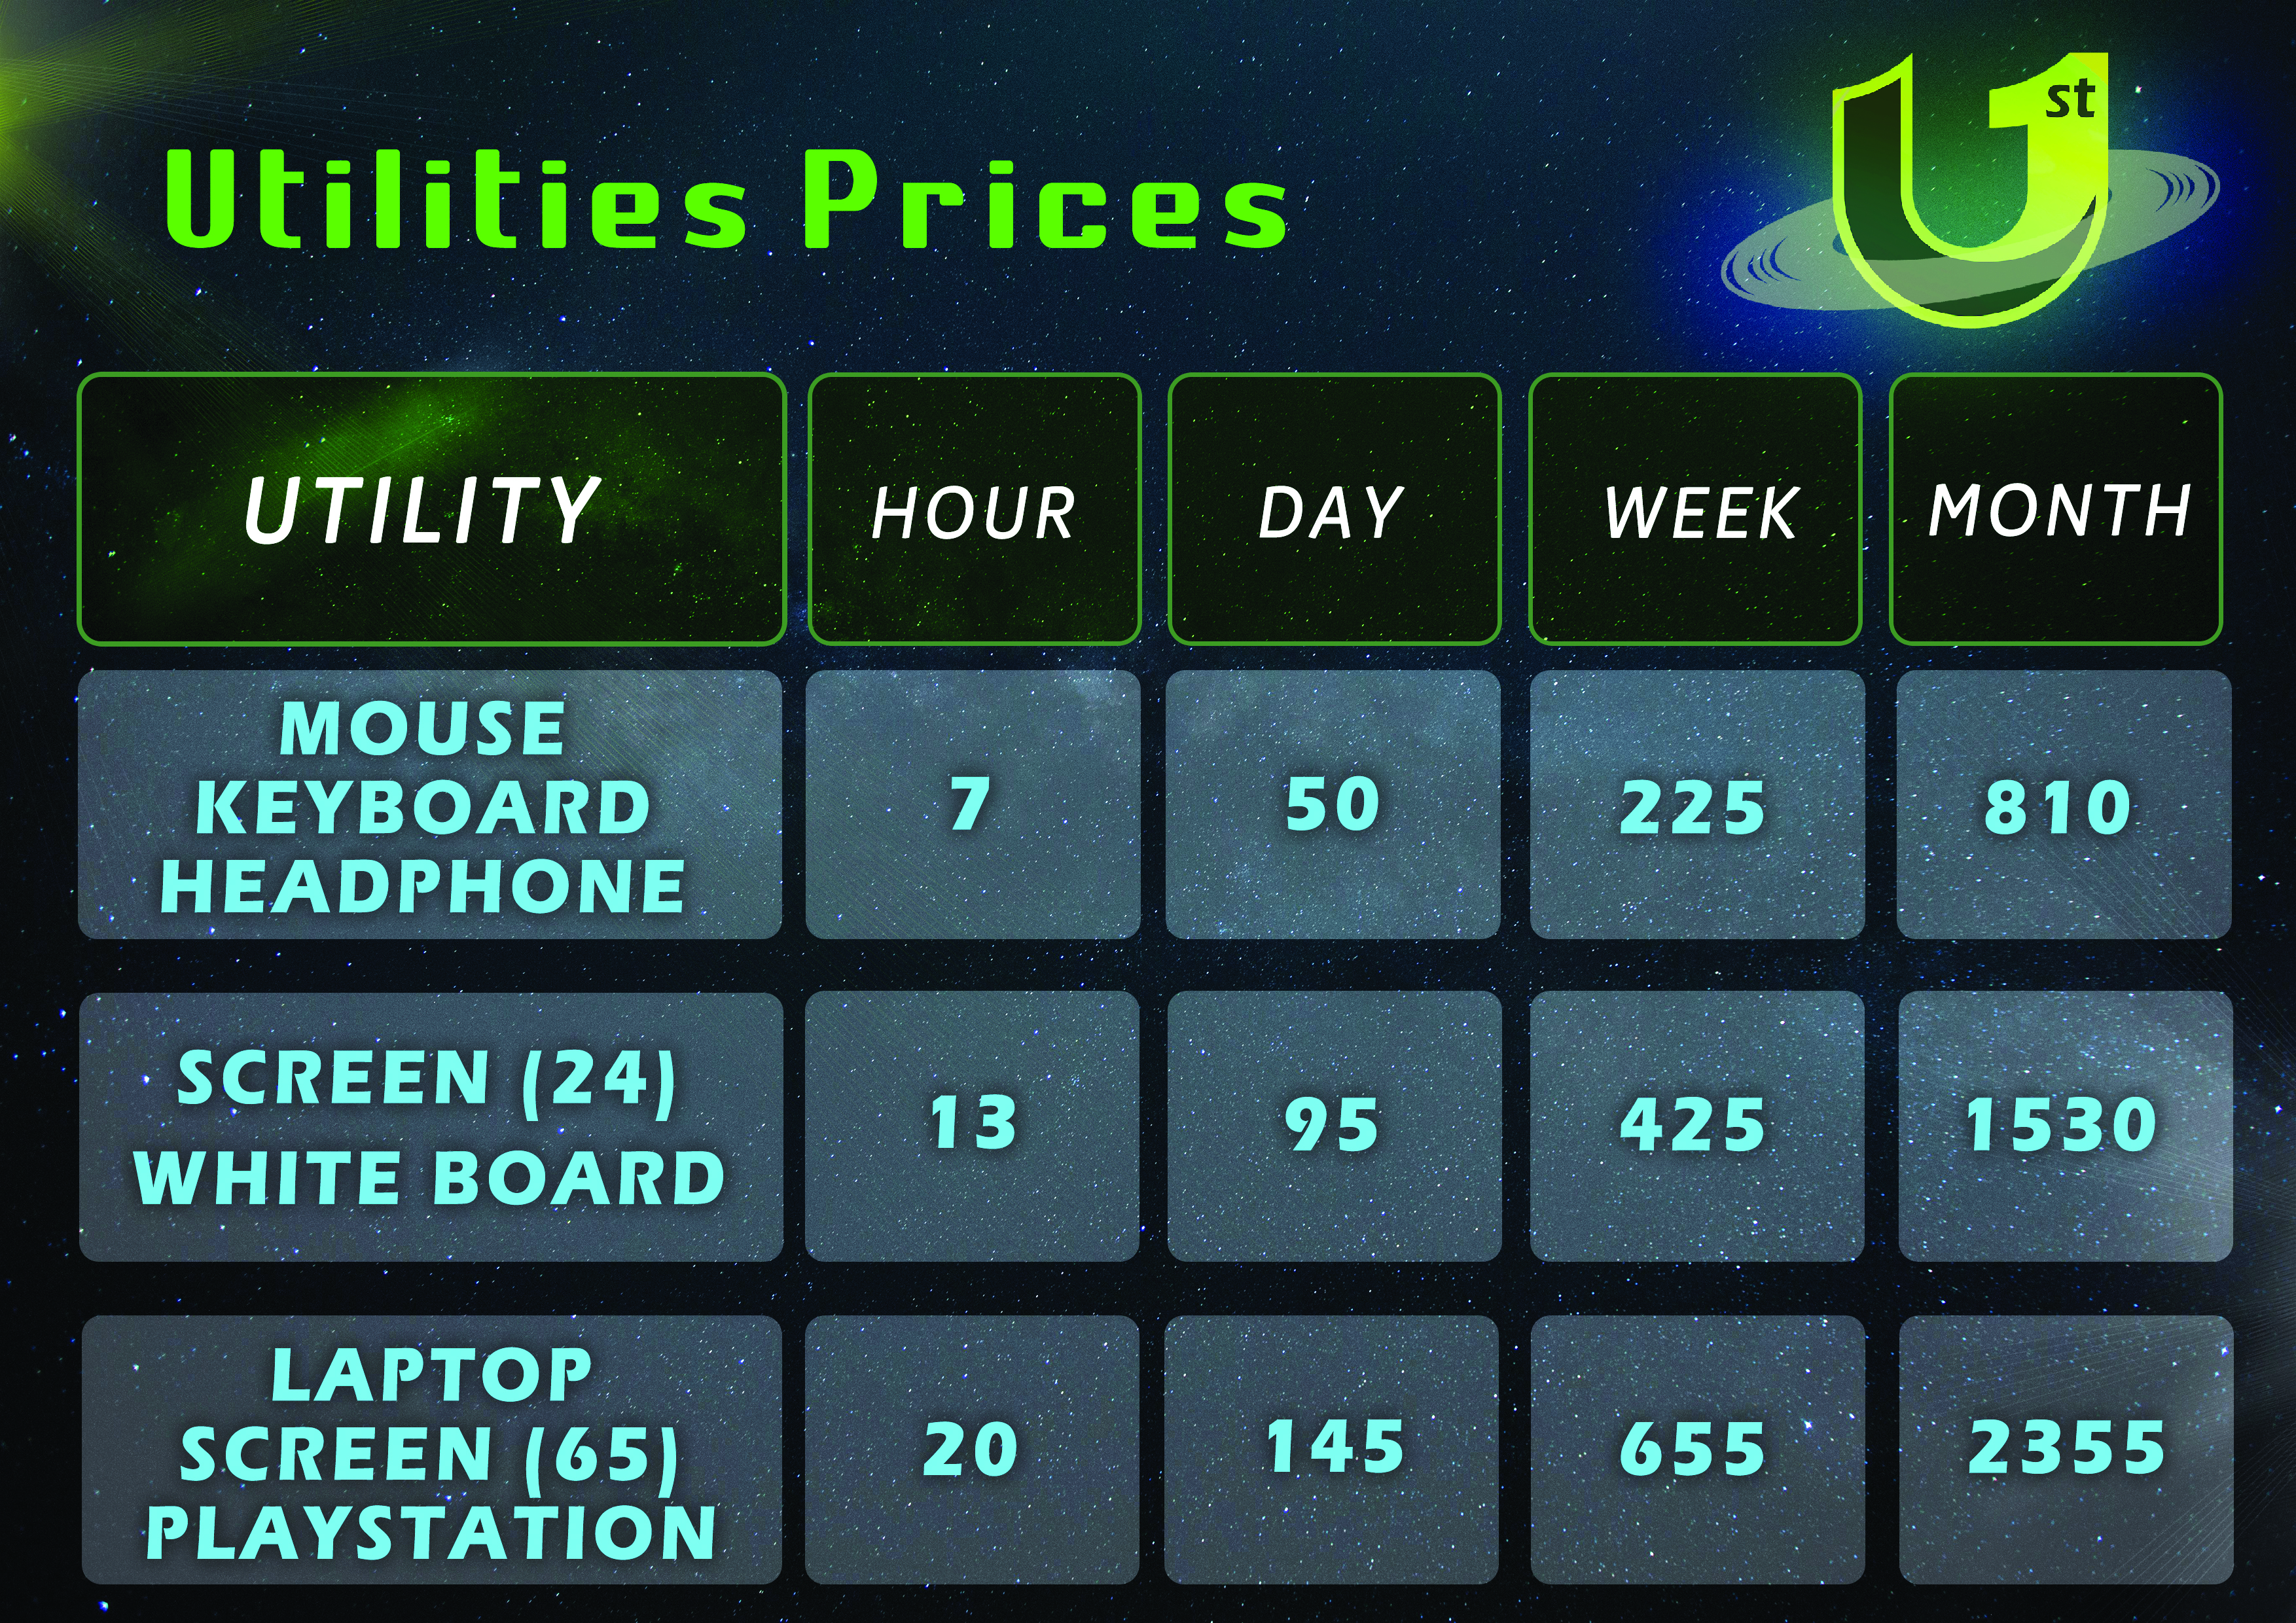 Utilities prices